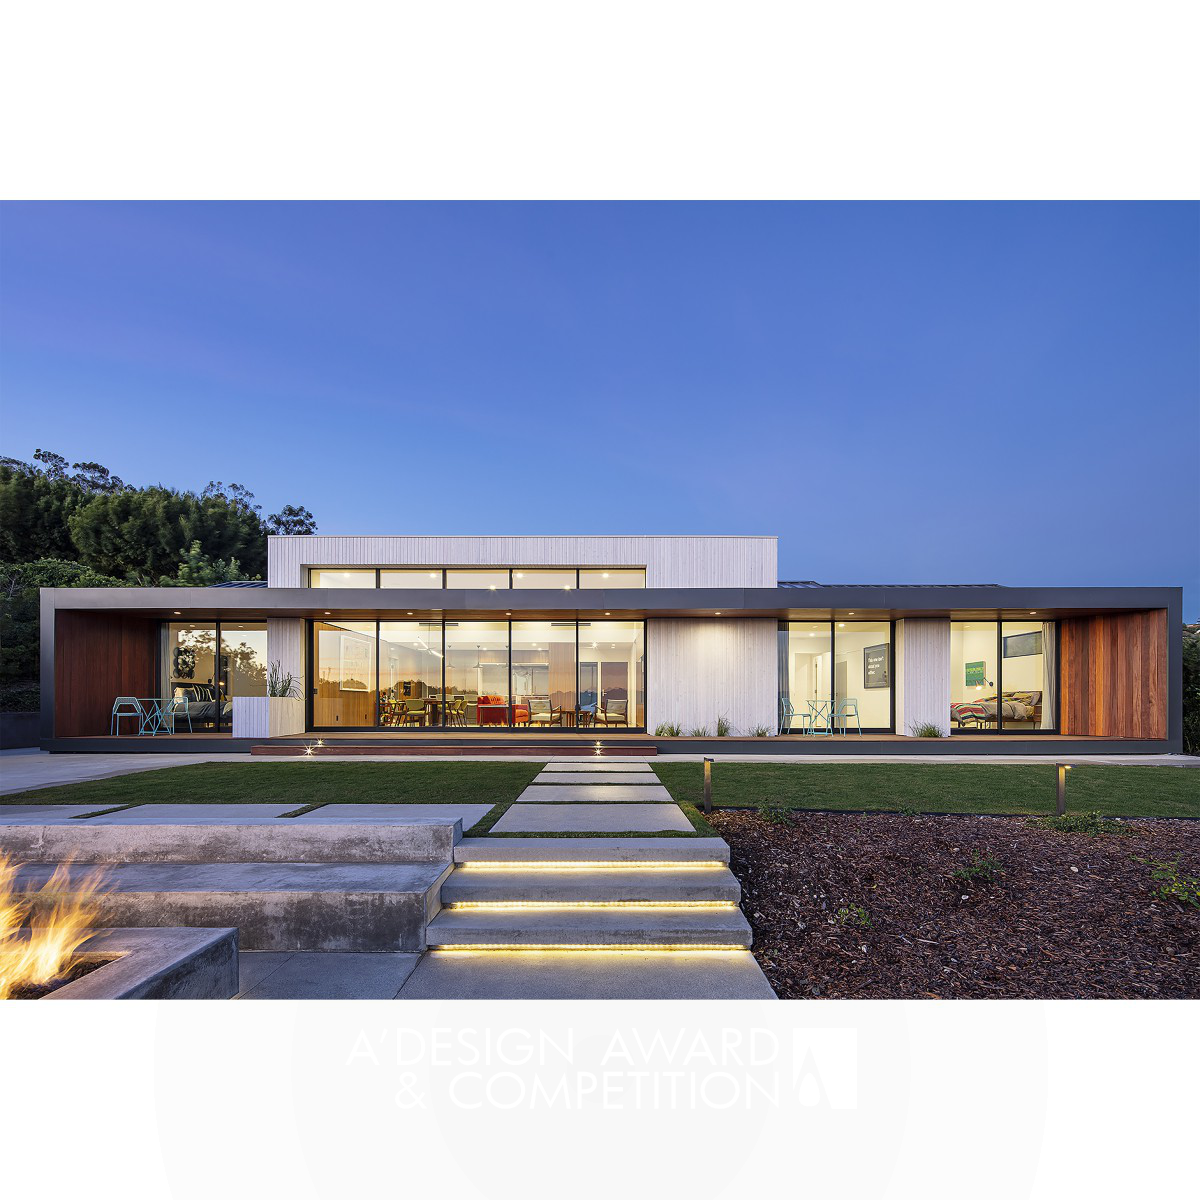 Crestridge Residence Single Family Home by Colega Architects